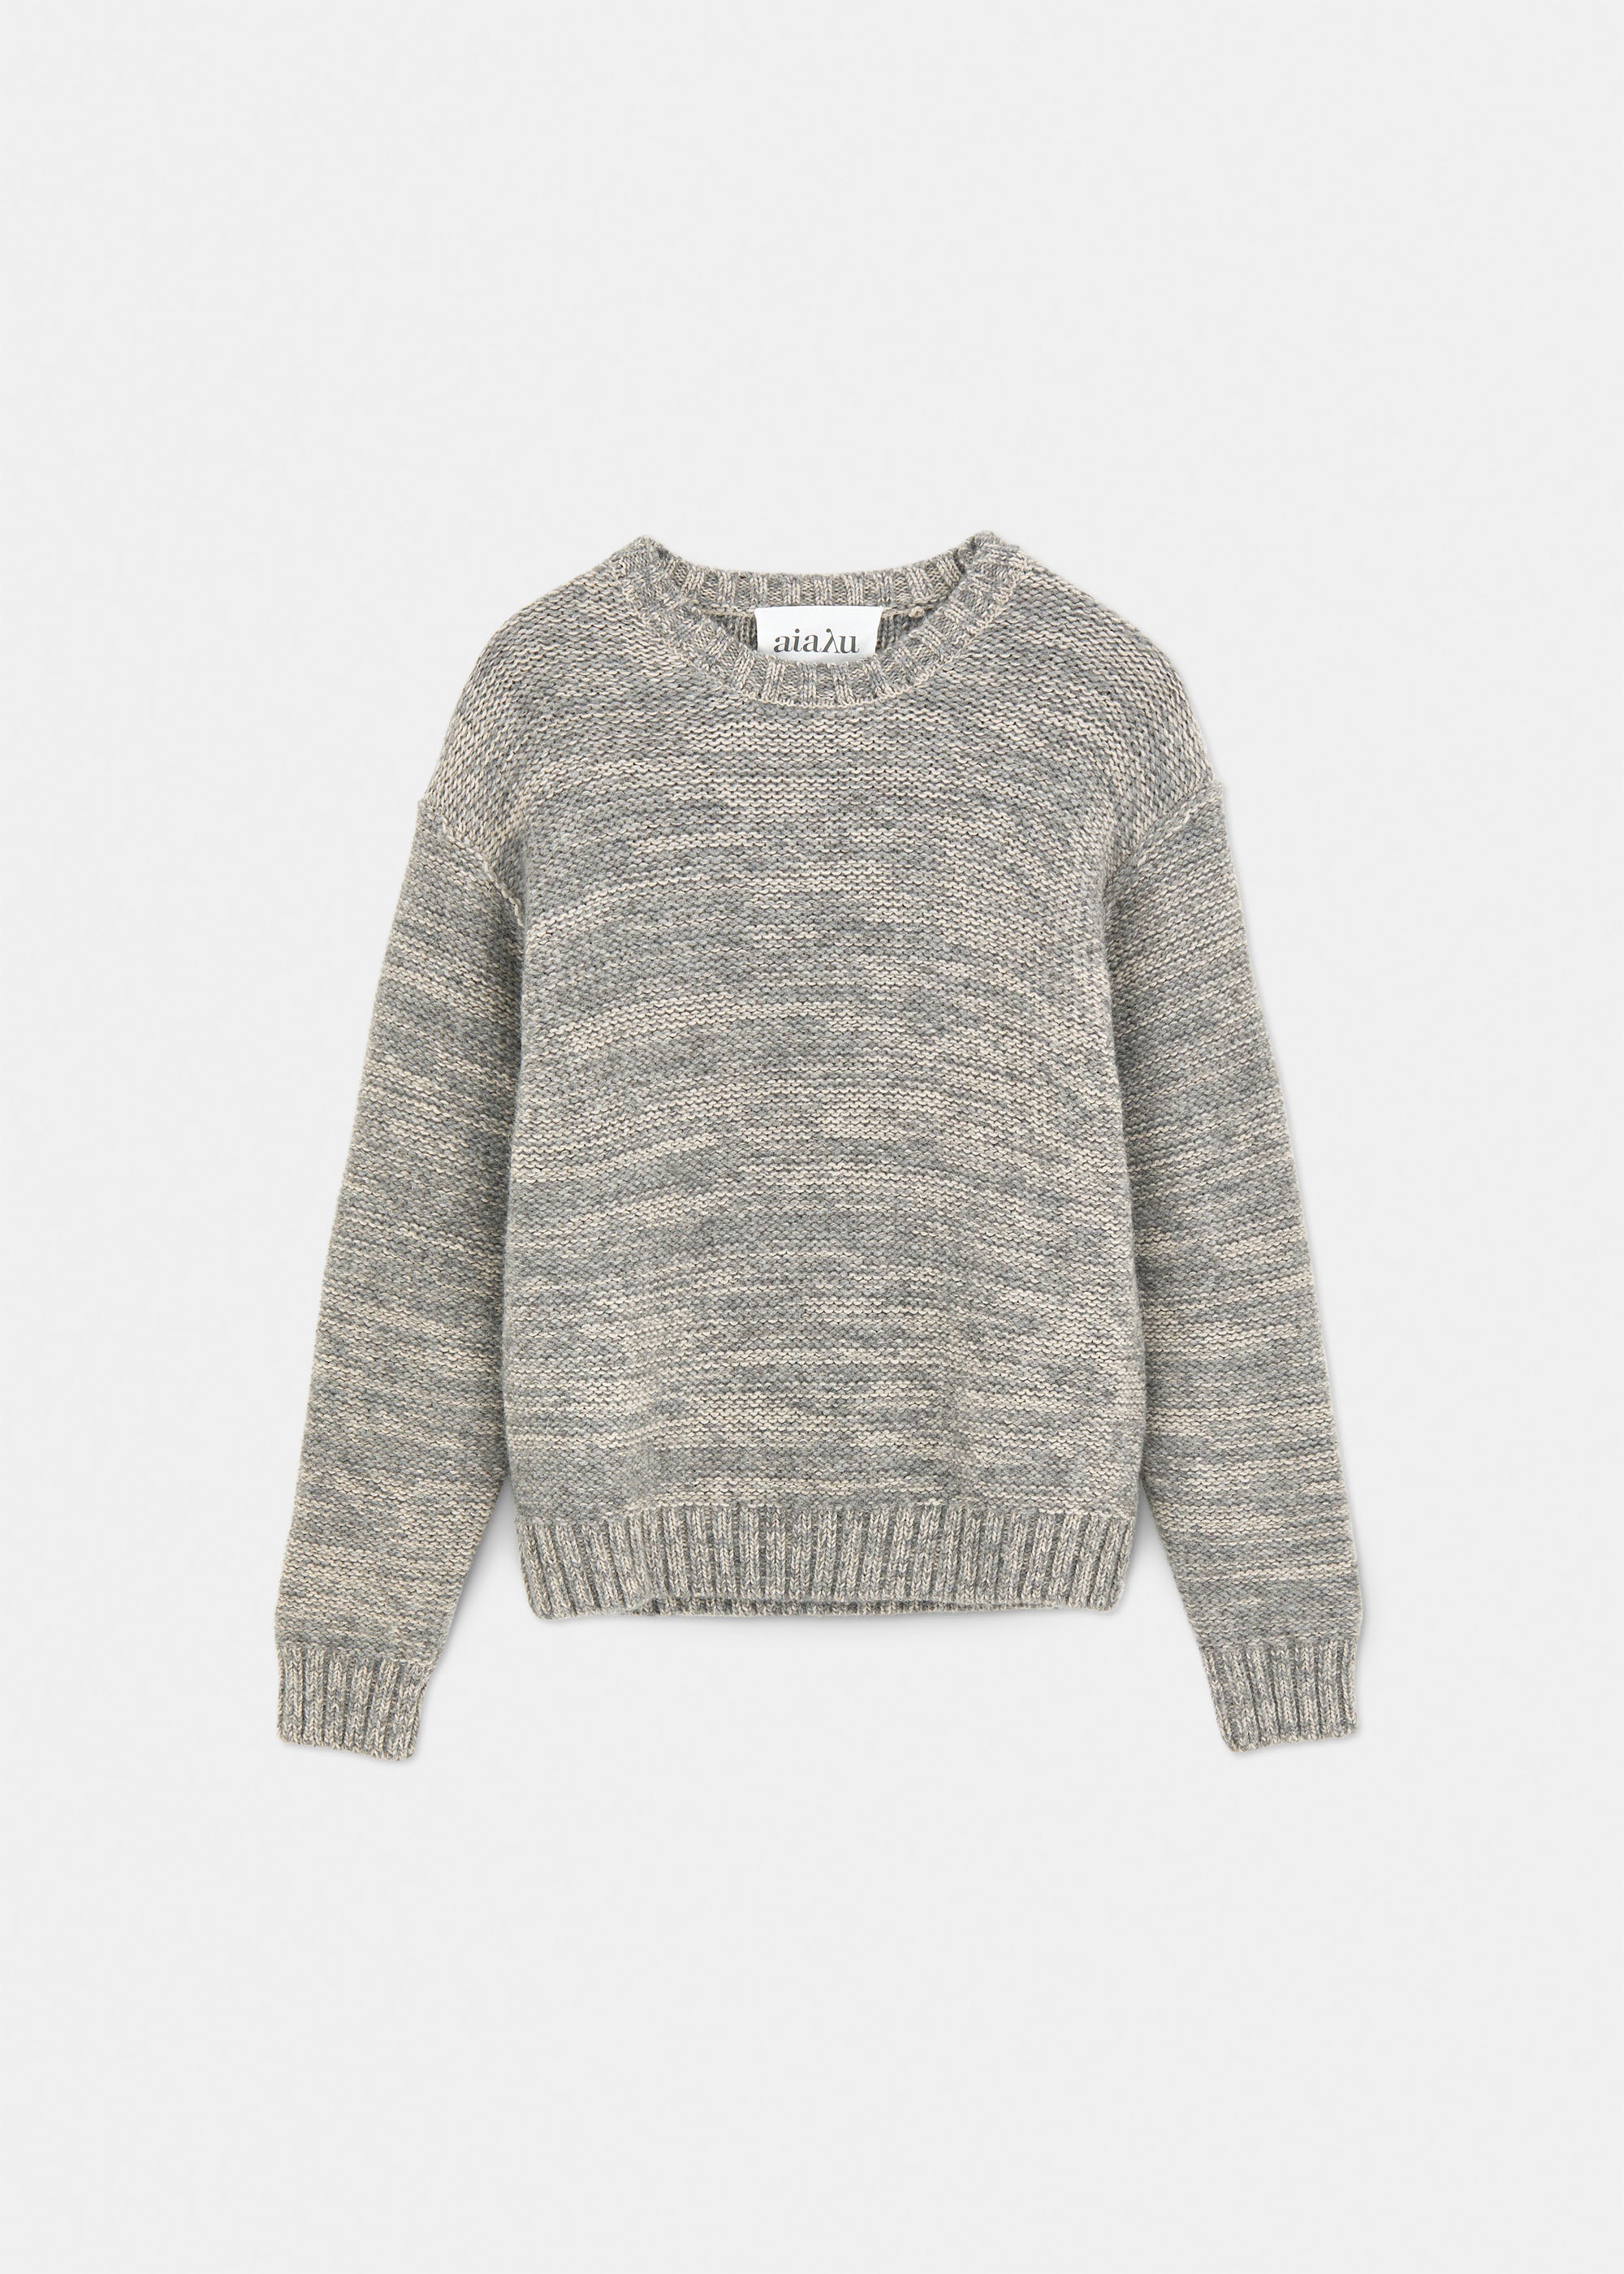 Blair llama wool sweater | Mix Grey